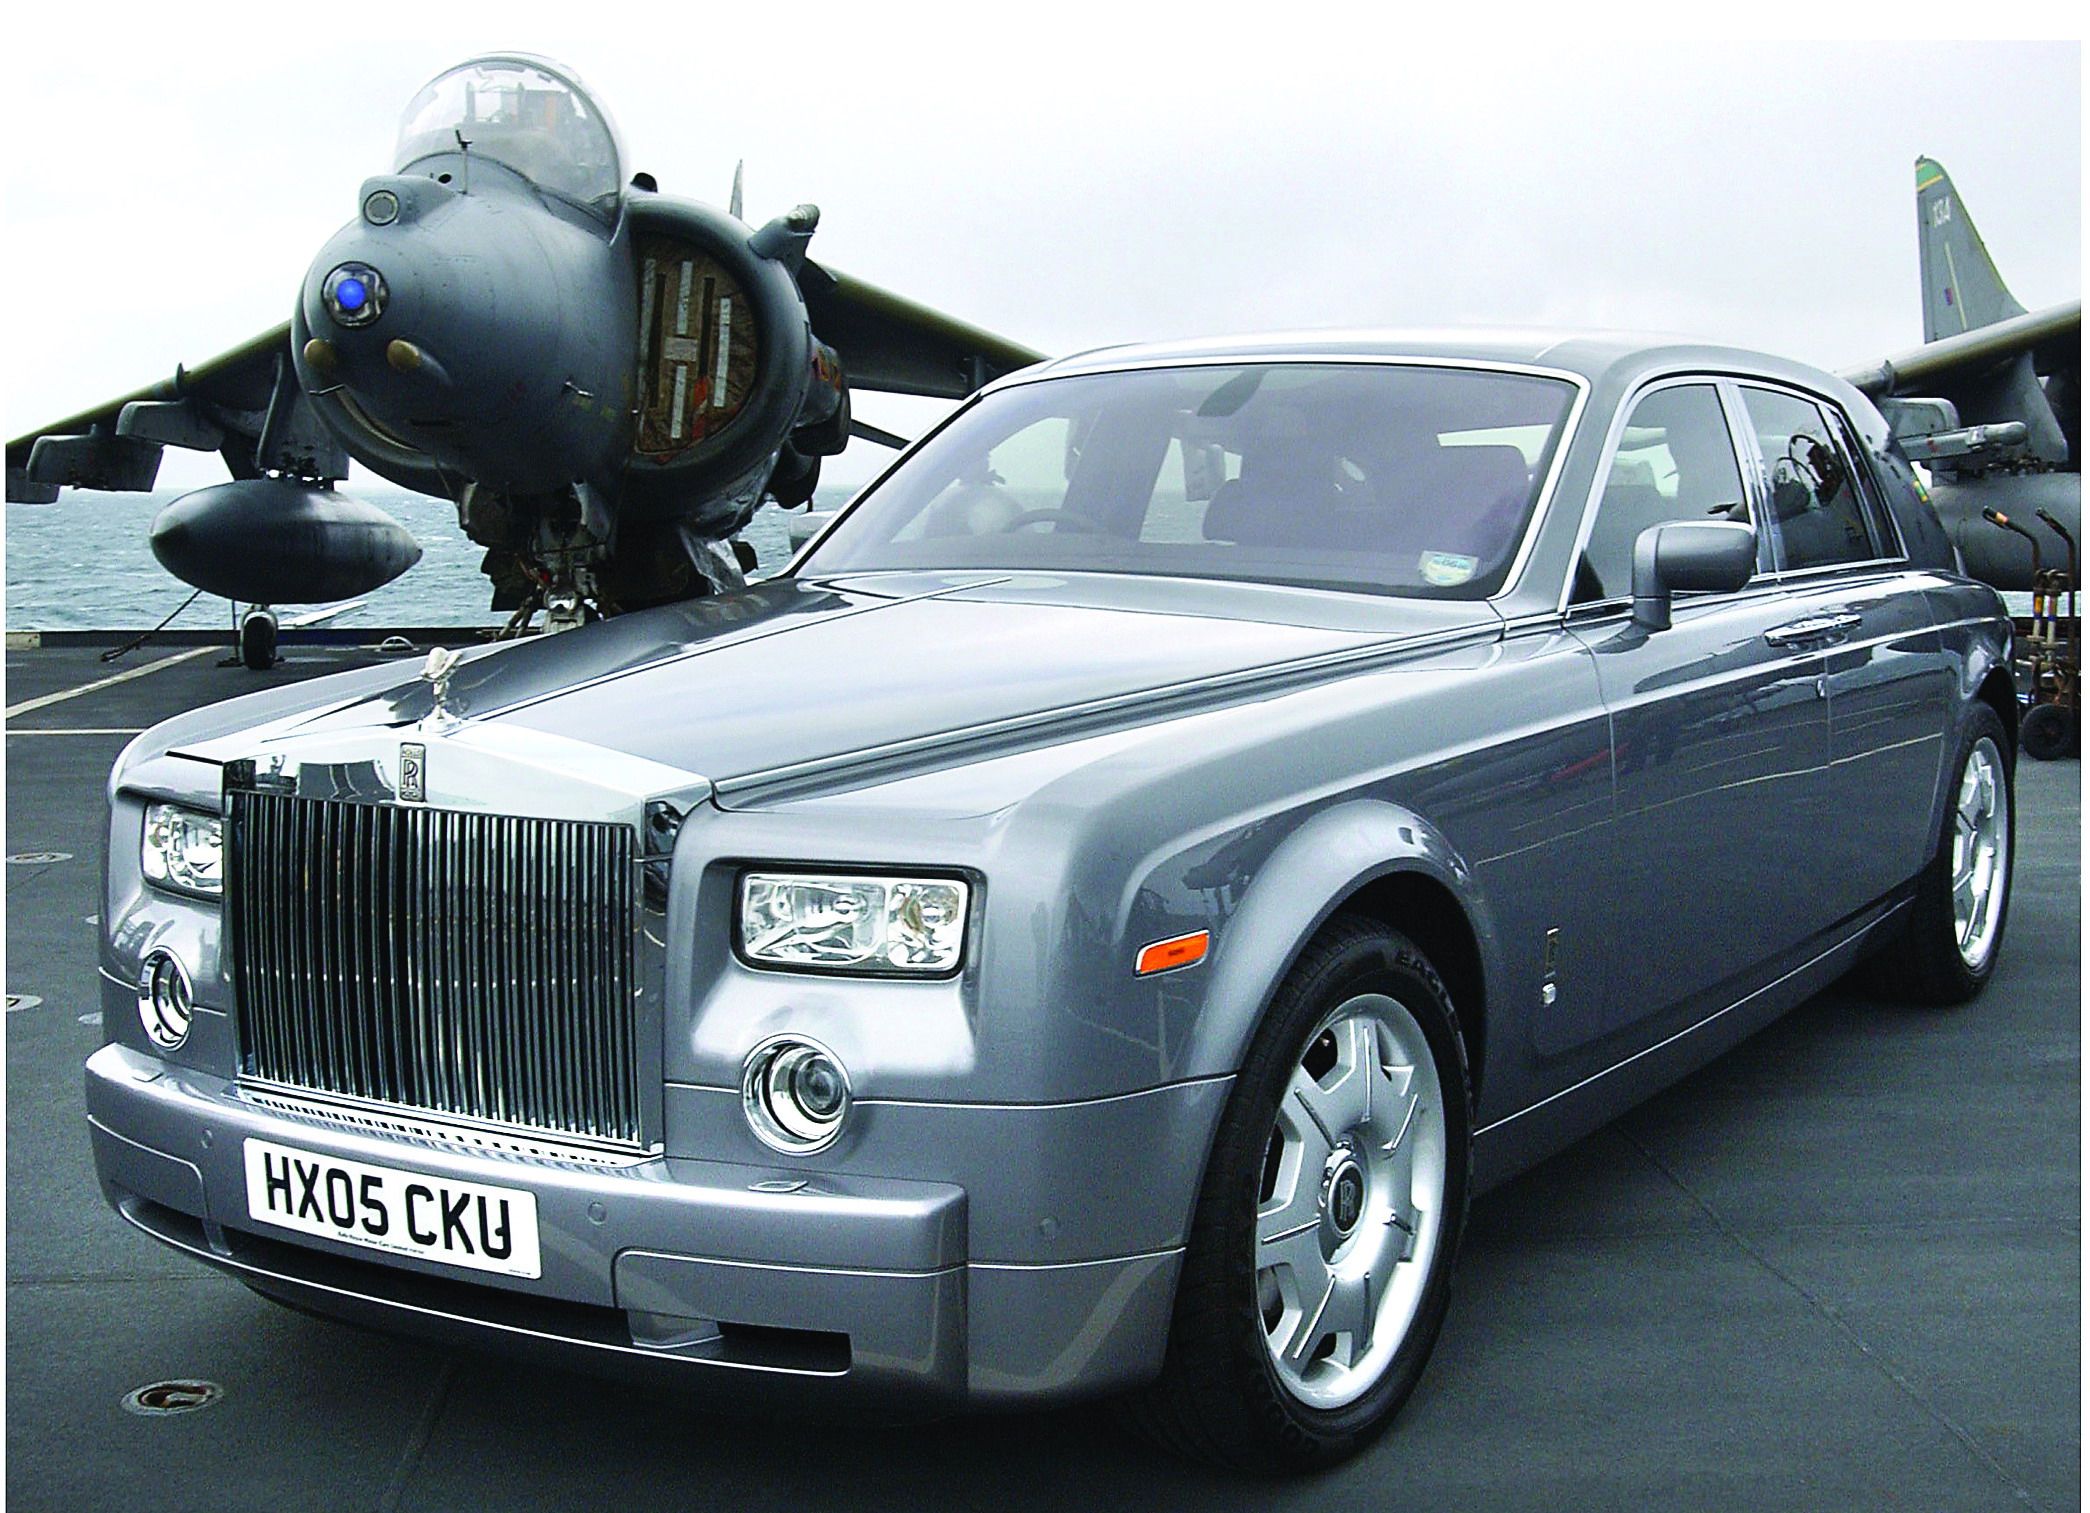 2006 Rolls-Royce Royal Navy flagship